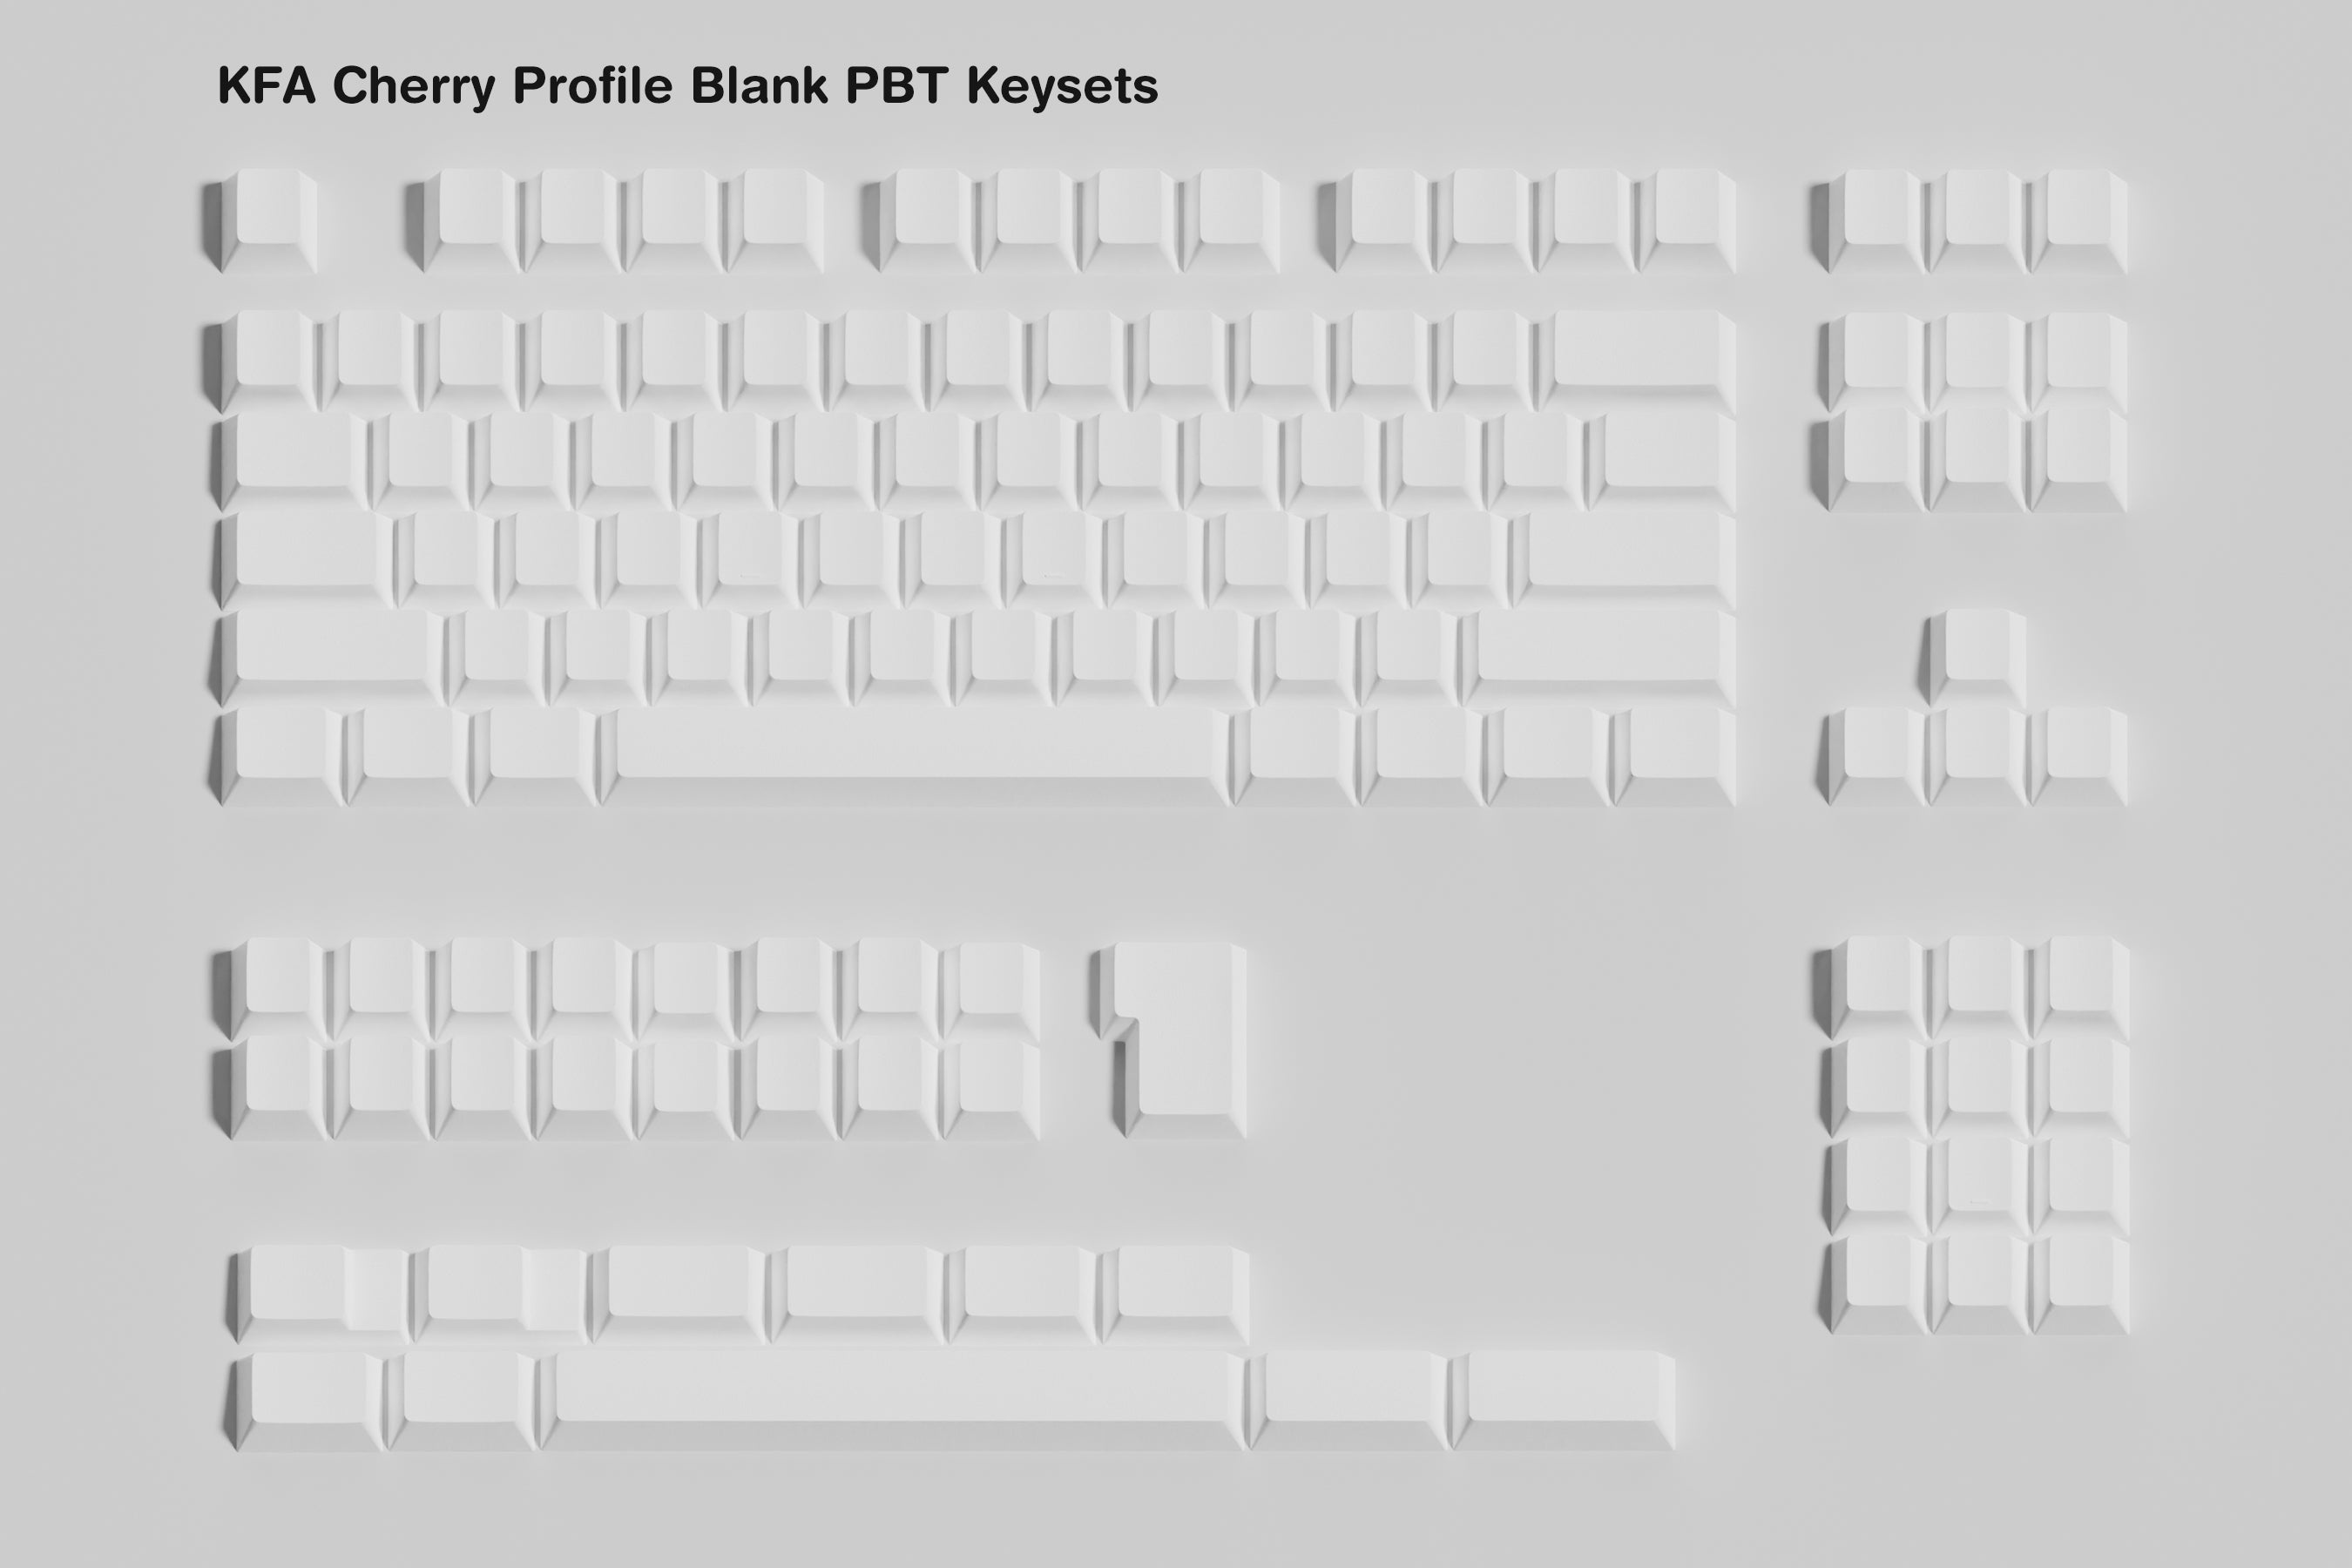 KFA Cherry Profile Blank PBT Keysets